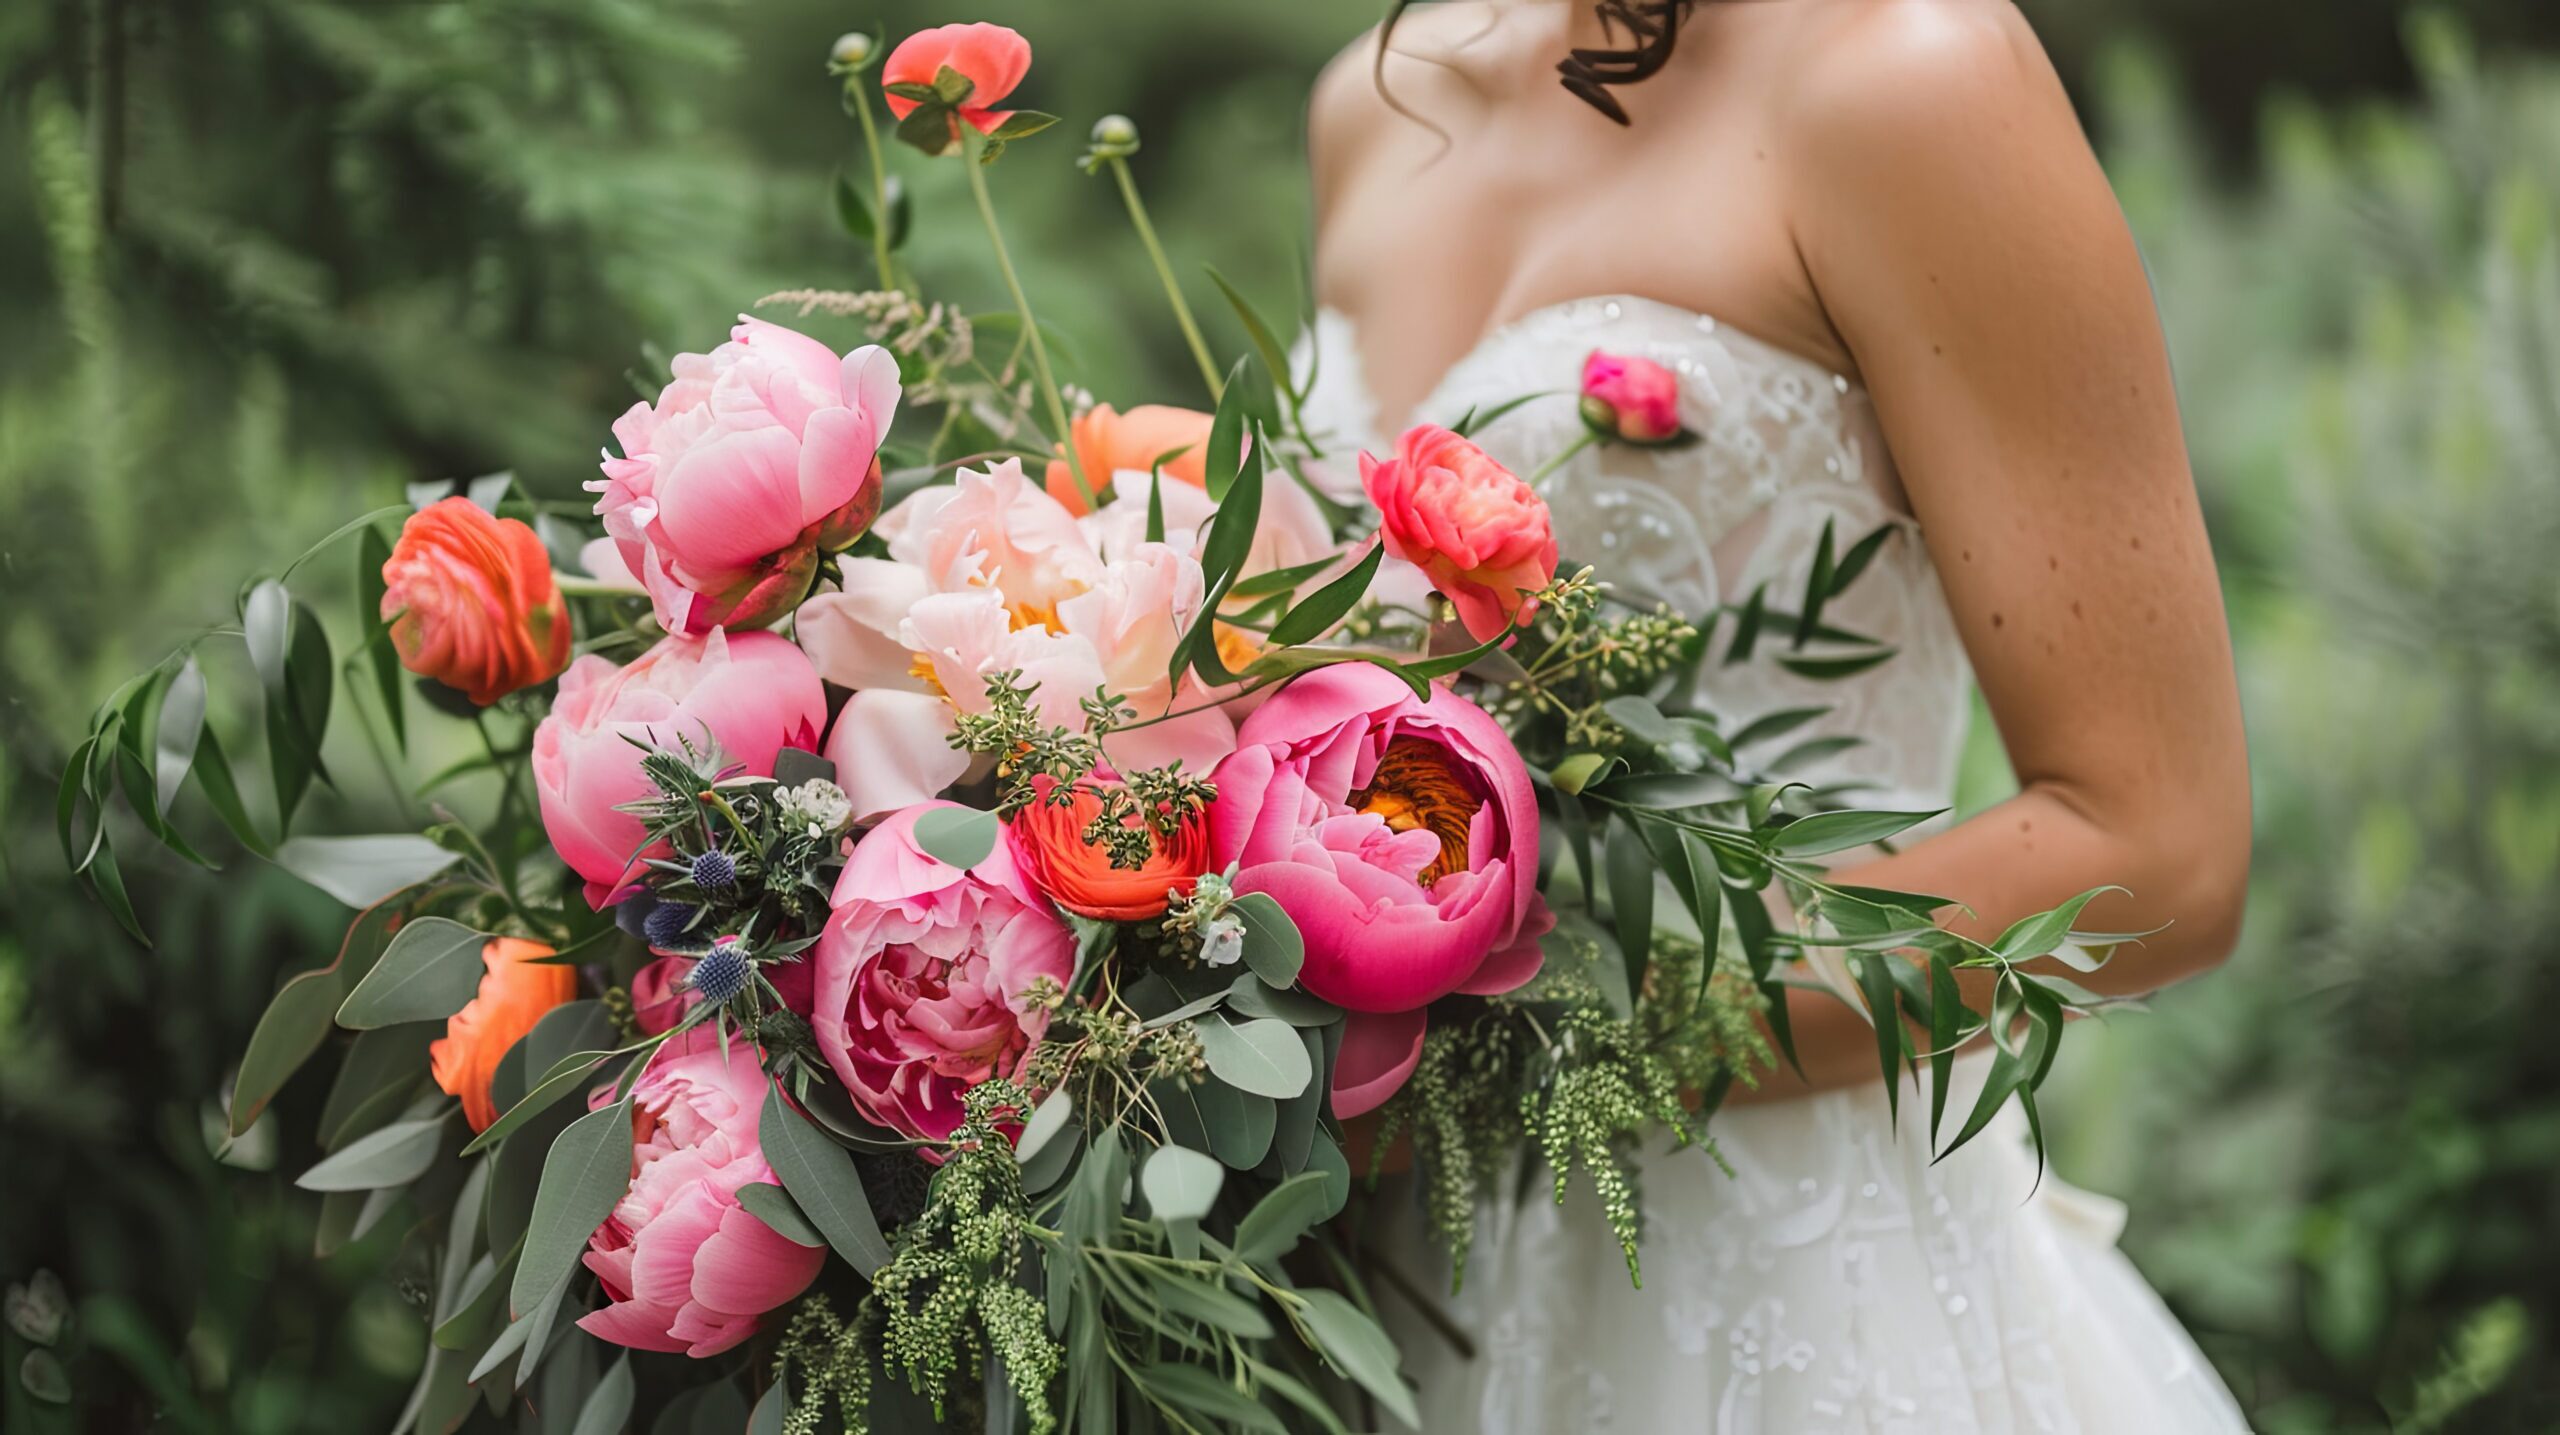 A bouquet of peonies in the hands of a gentle bride